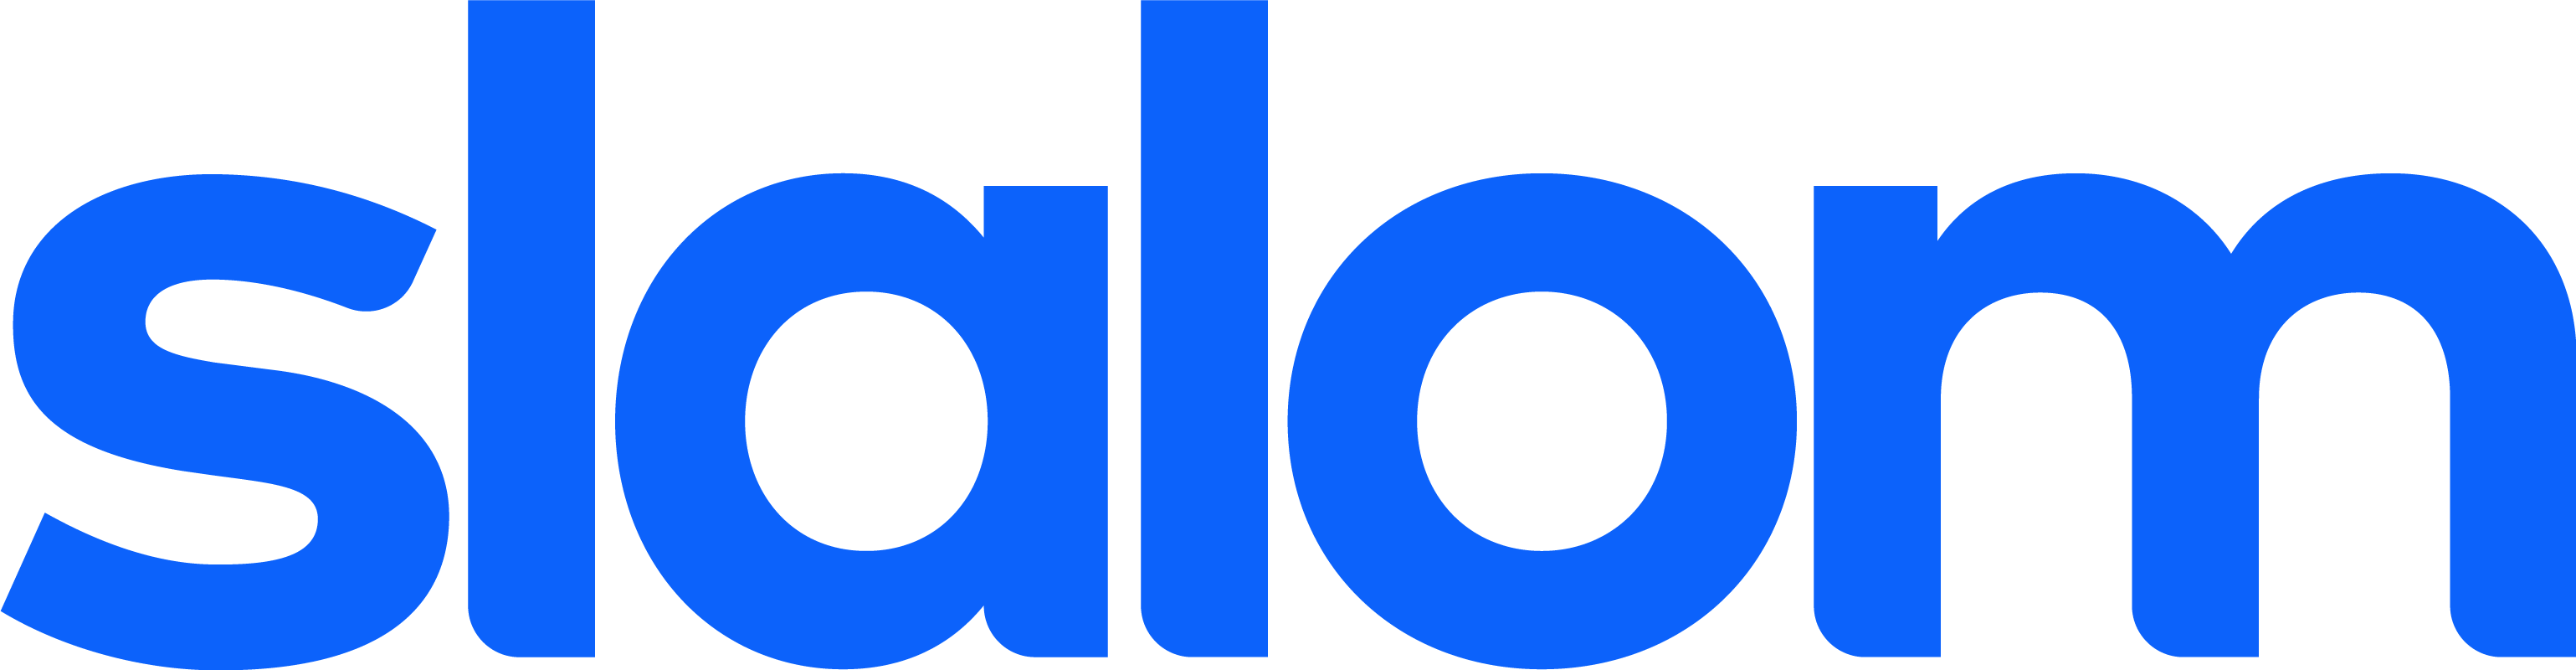 Slalom-logo-800px-blue.png